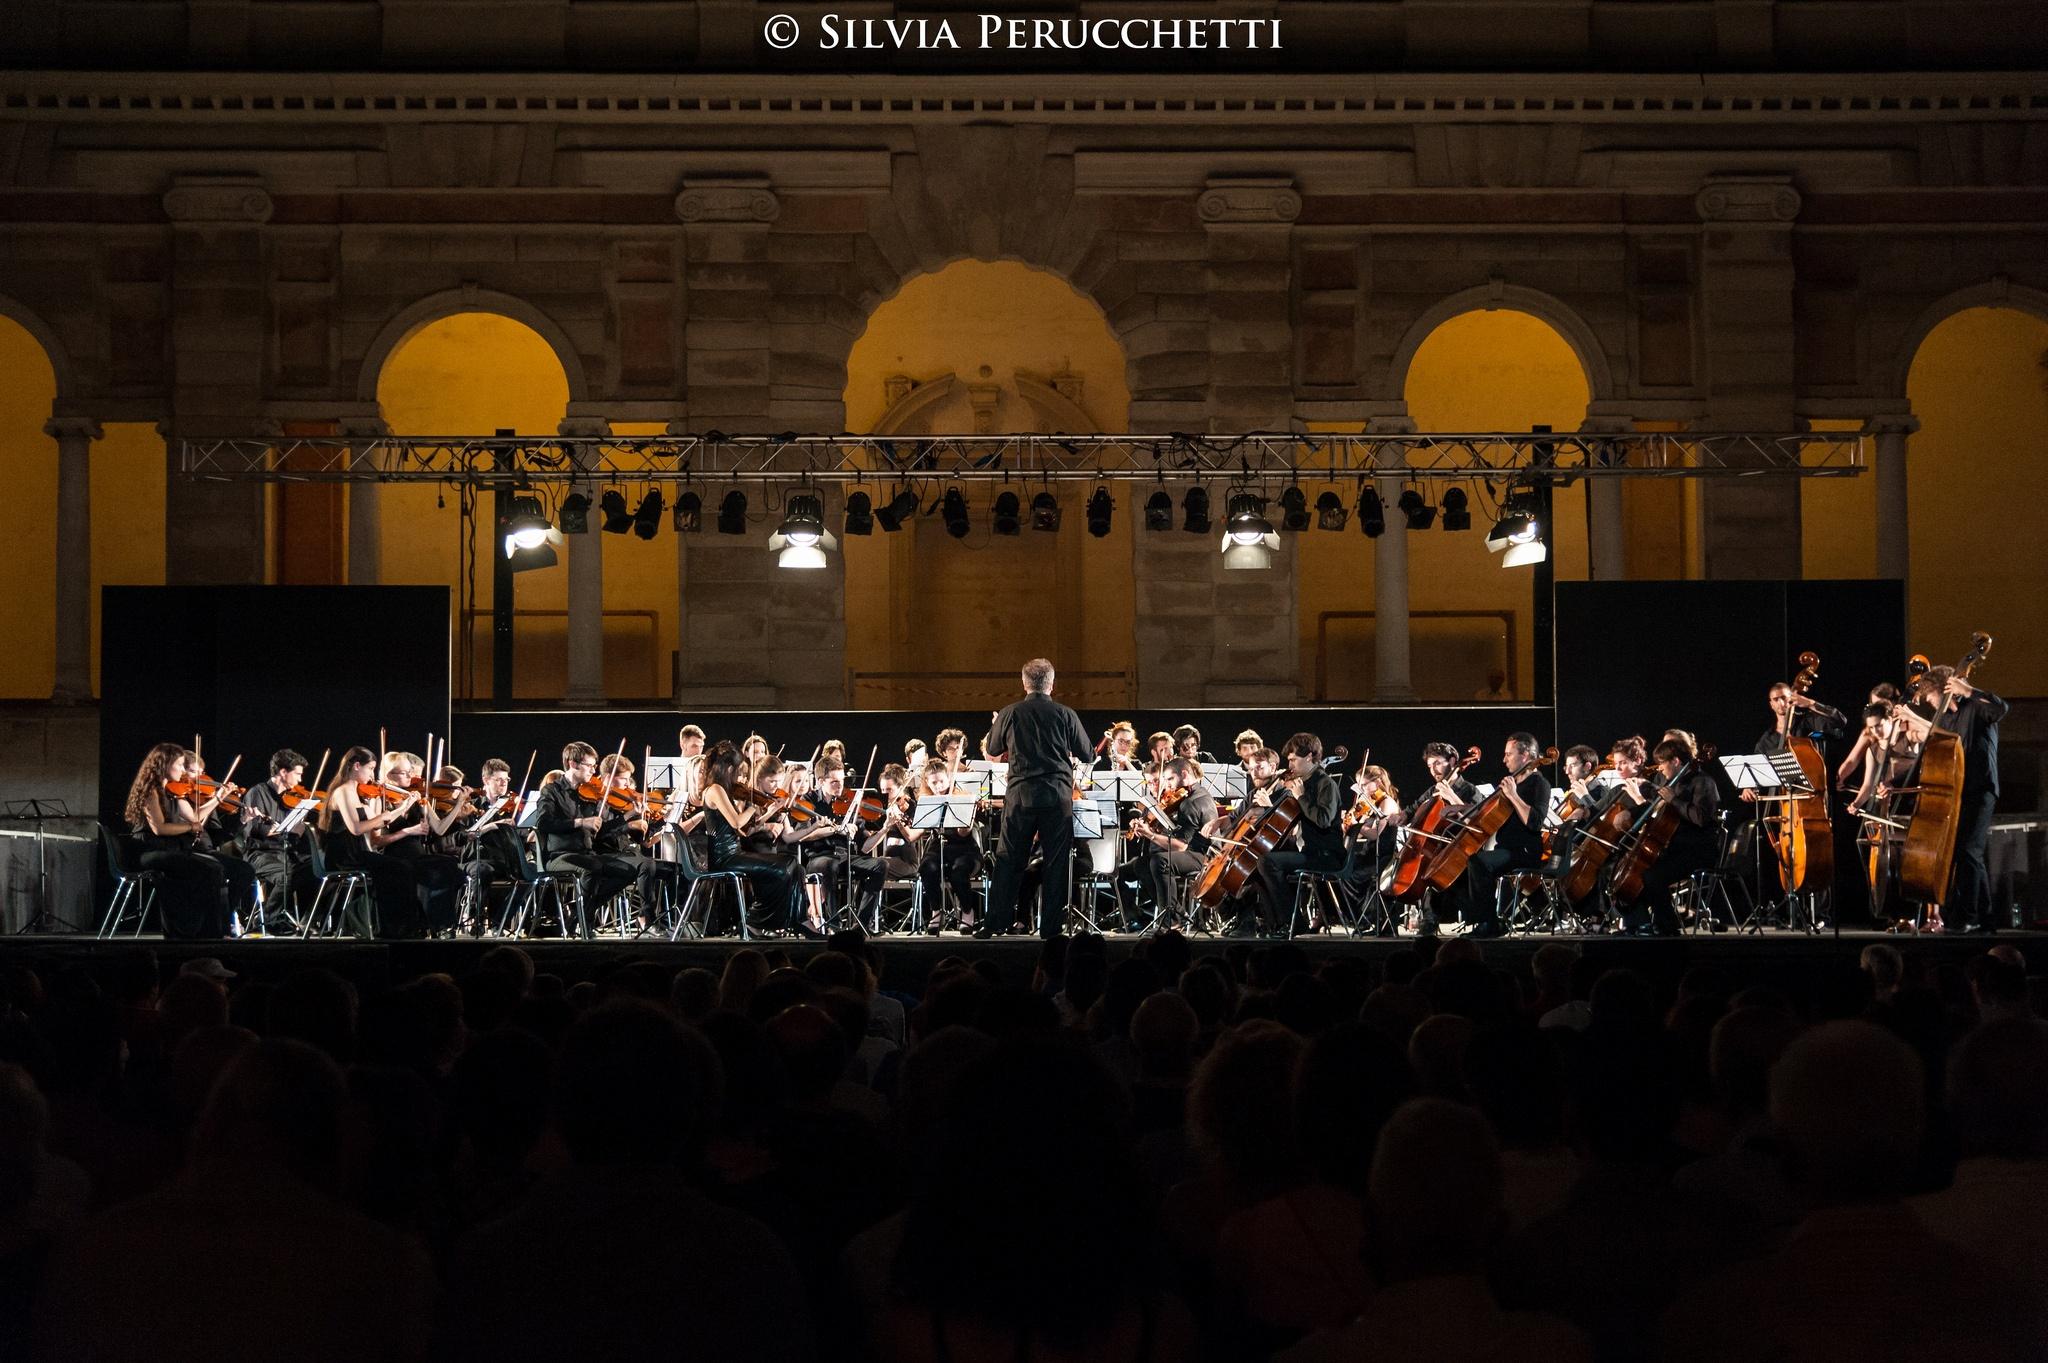 Orchestra AFAM Istituto Peri Merulo4 foto 2016